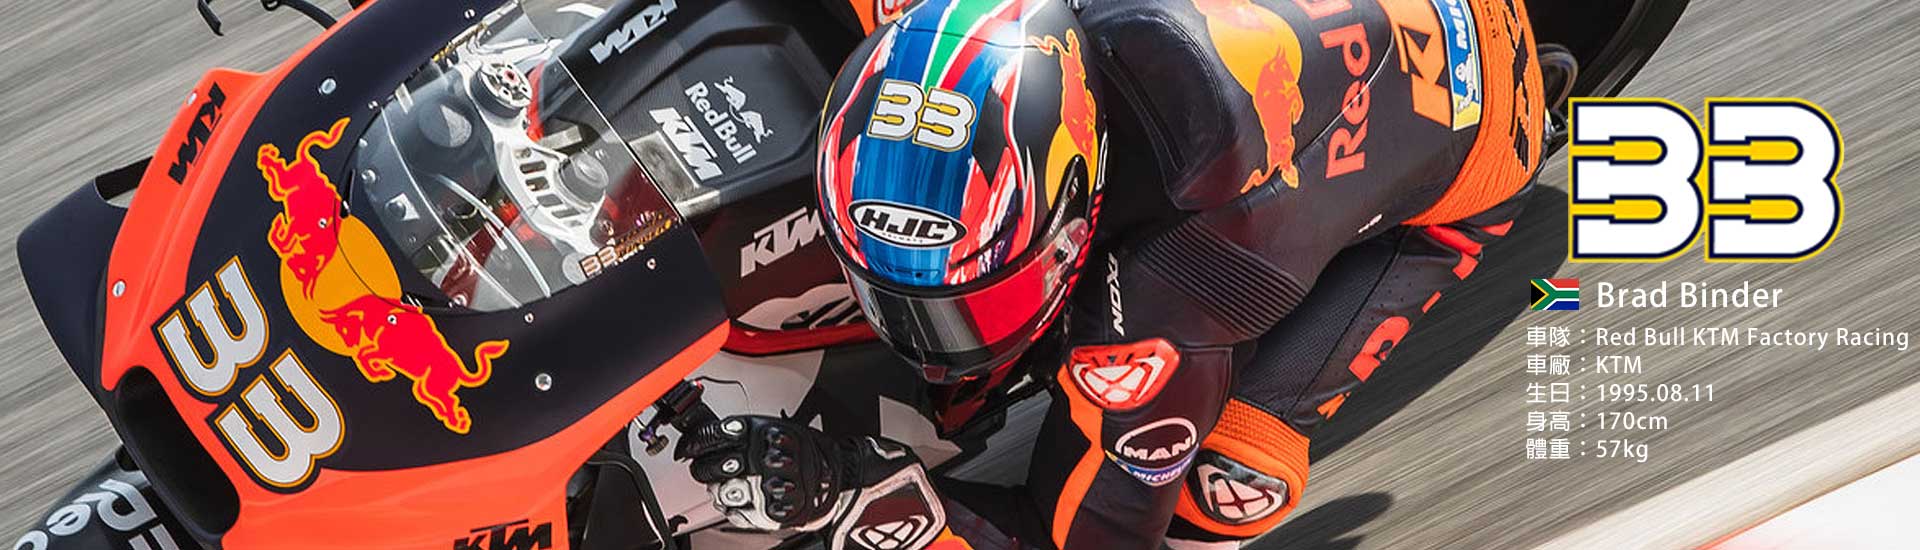 2021 MotoGP 【33】Brad Binder